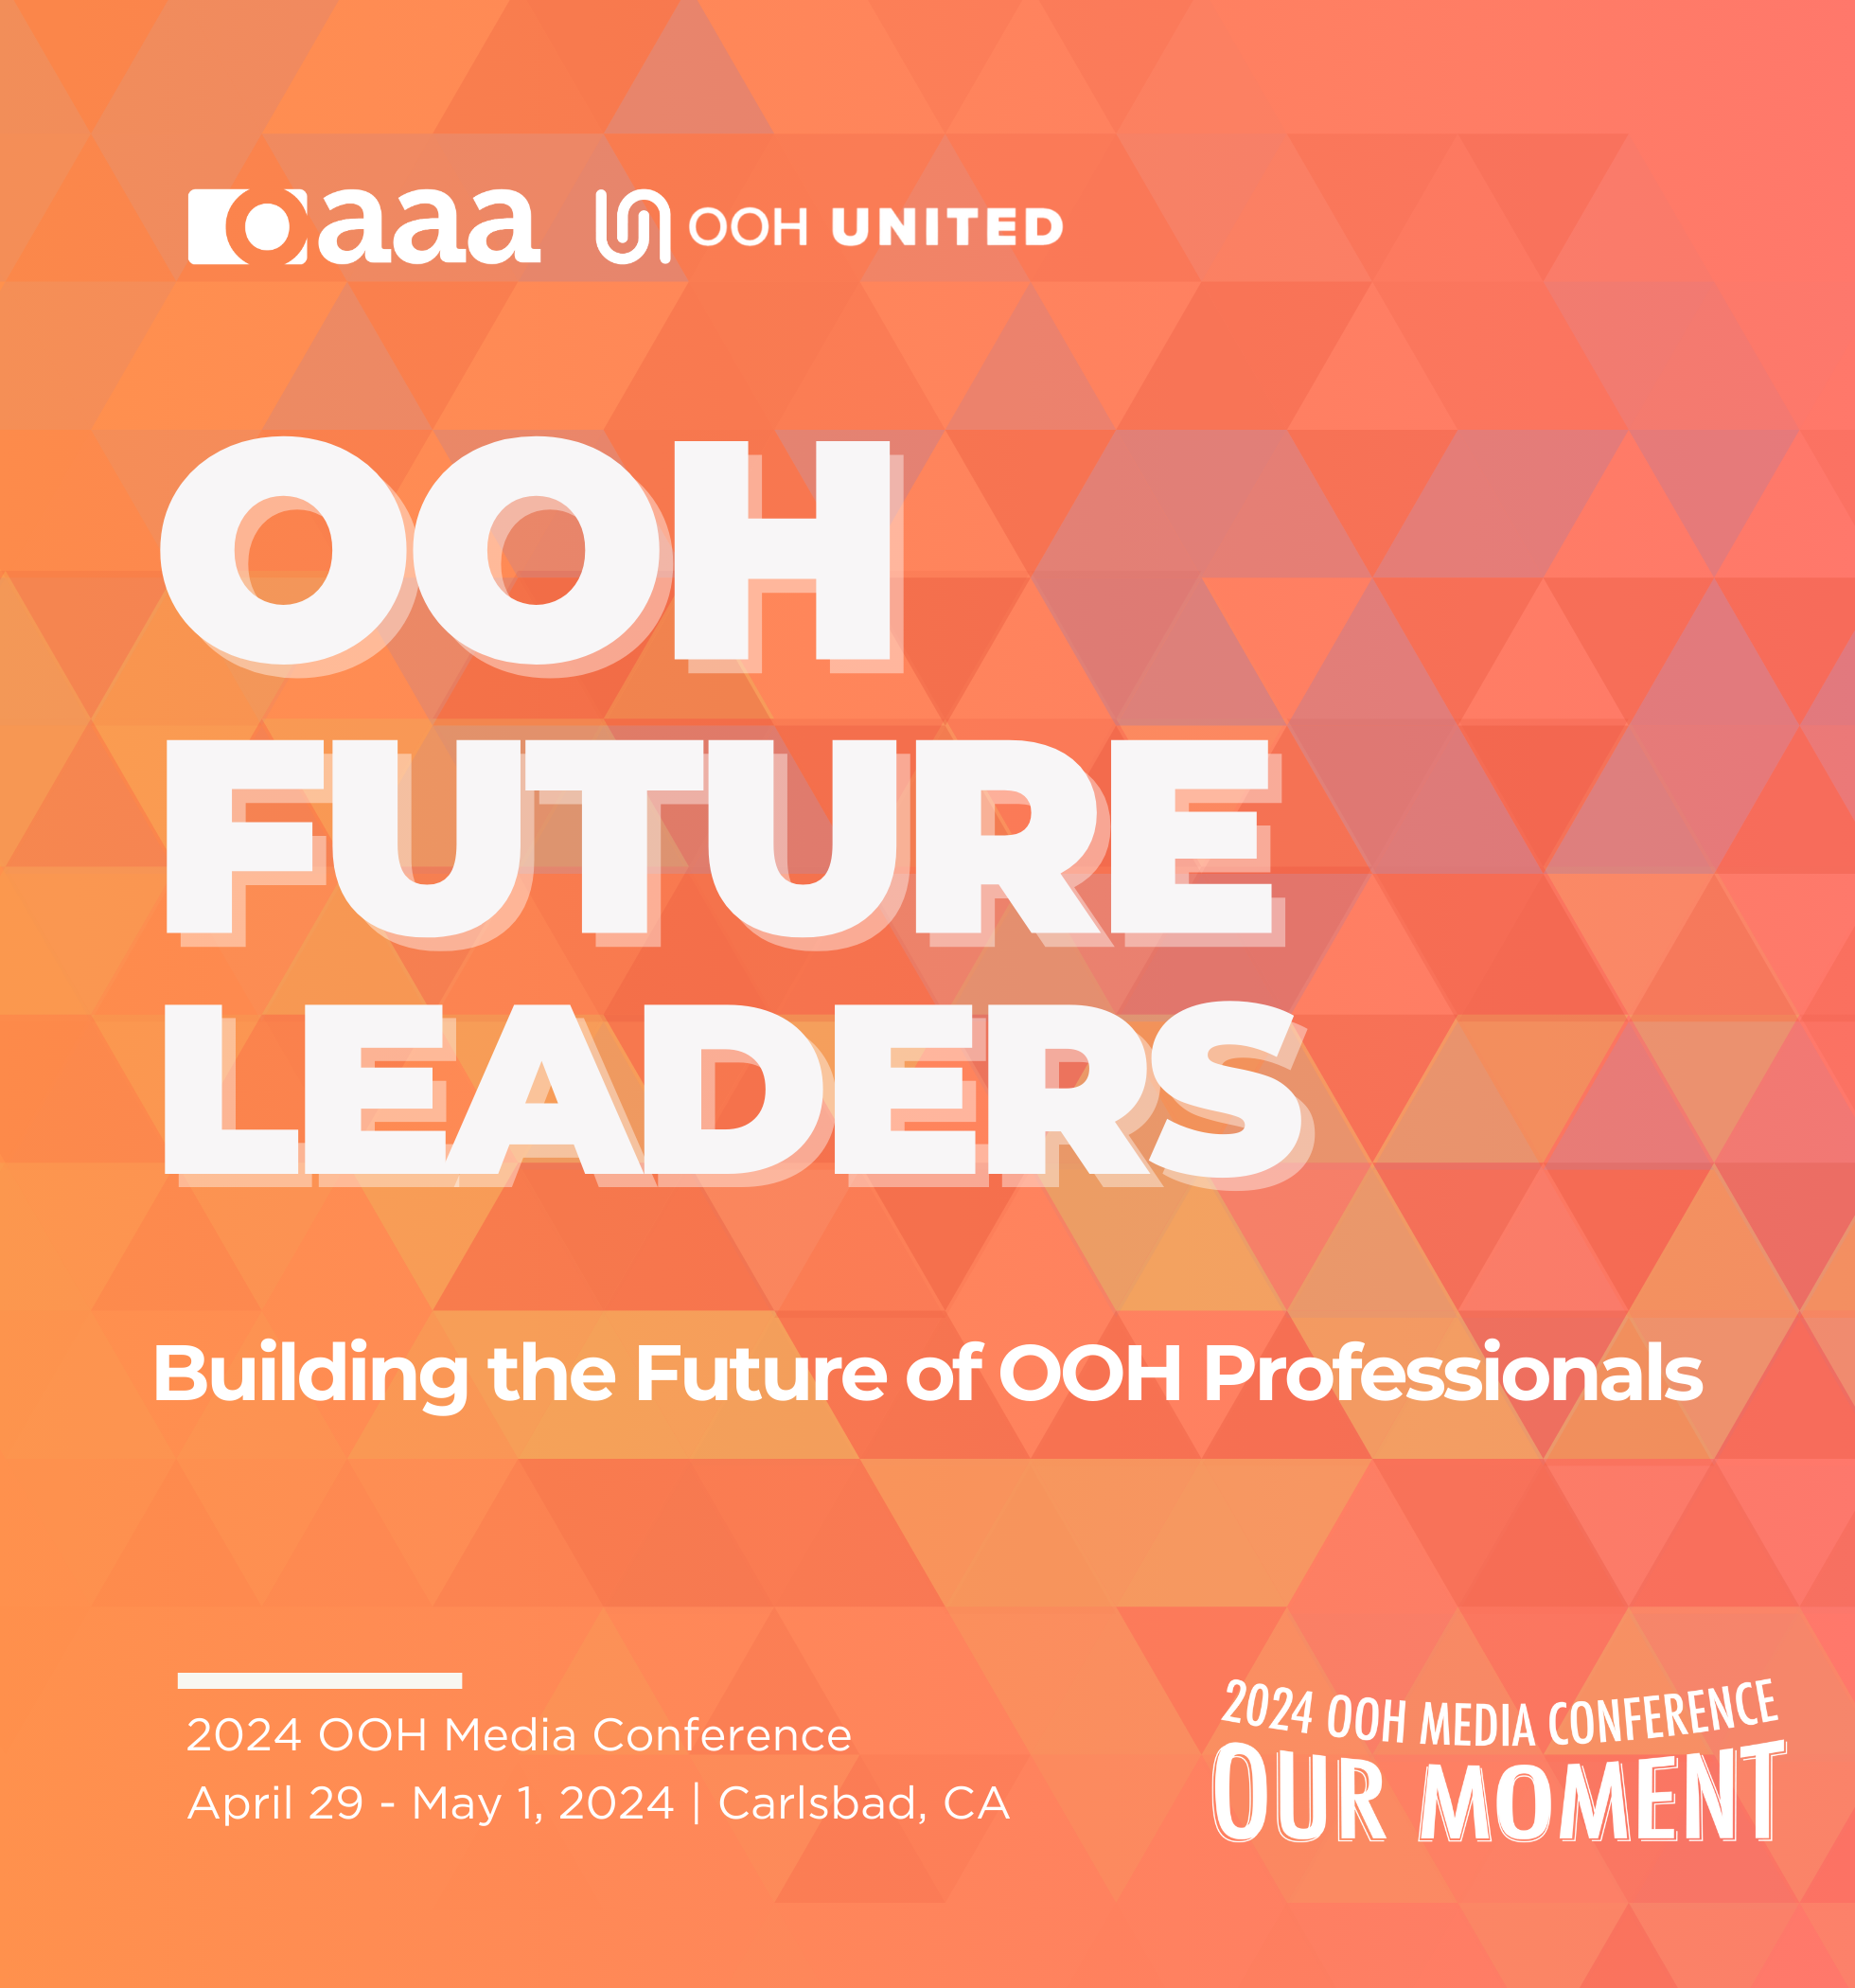 OAAA & OOH UNITED Announce 2024 Future Leaders Program Delegates